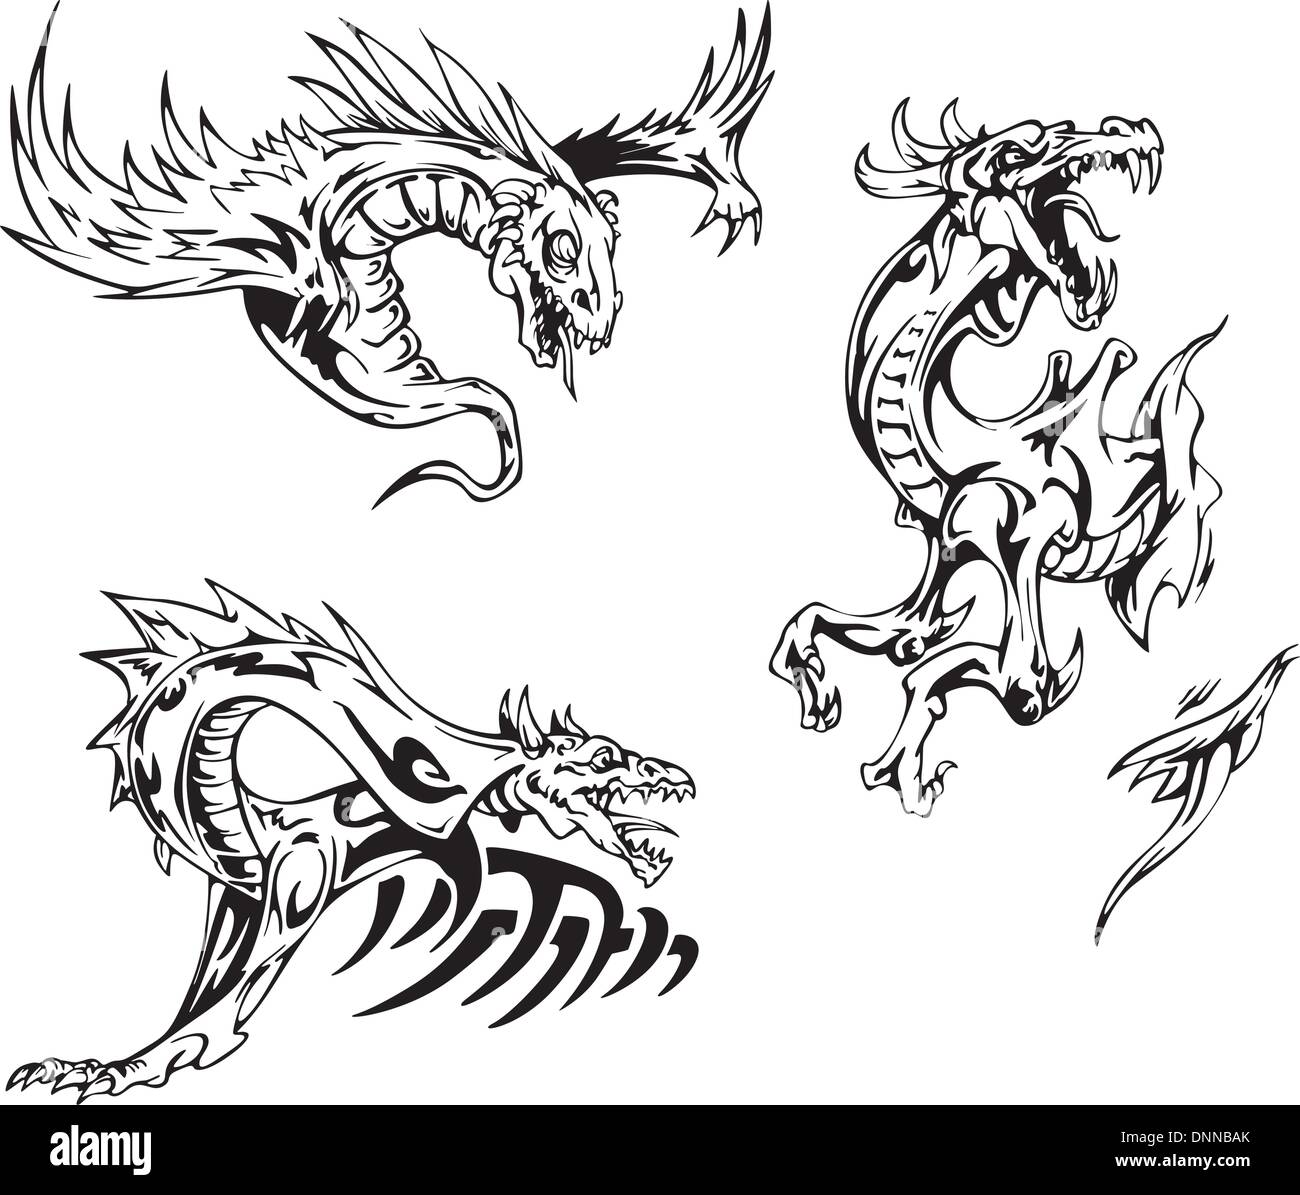 Dragon tattoo designs. Set of vector illustrations. Stock Vector